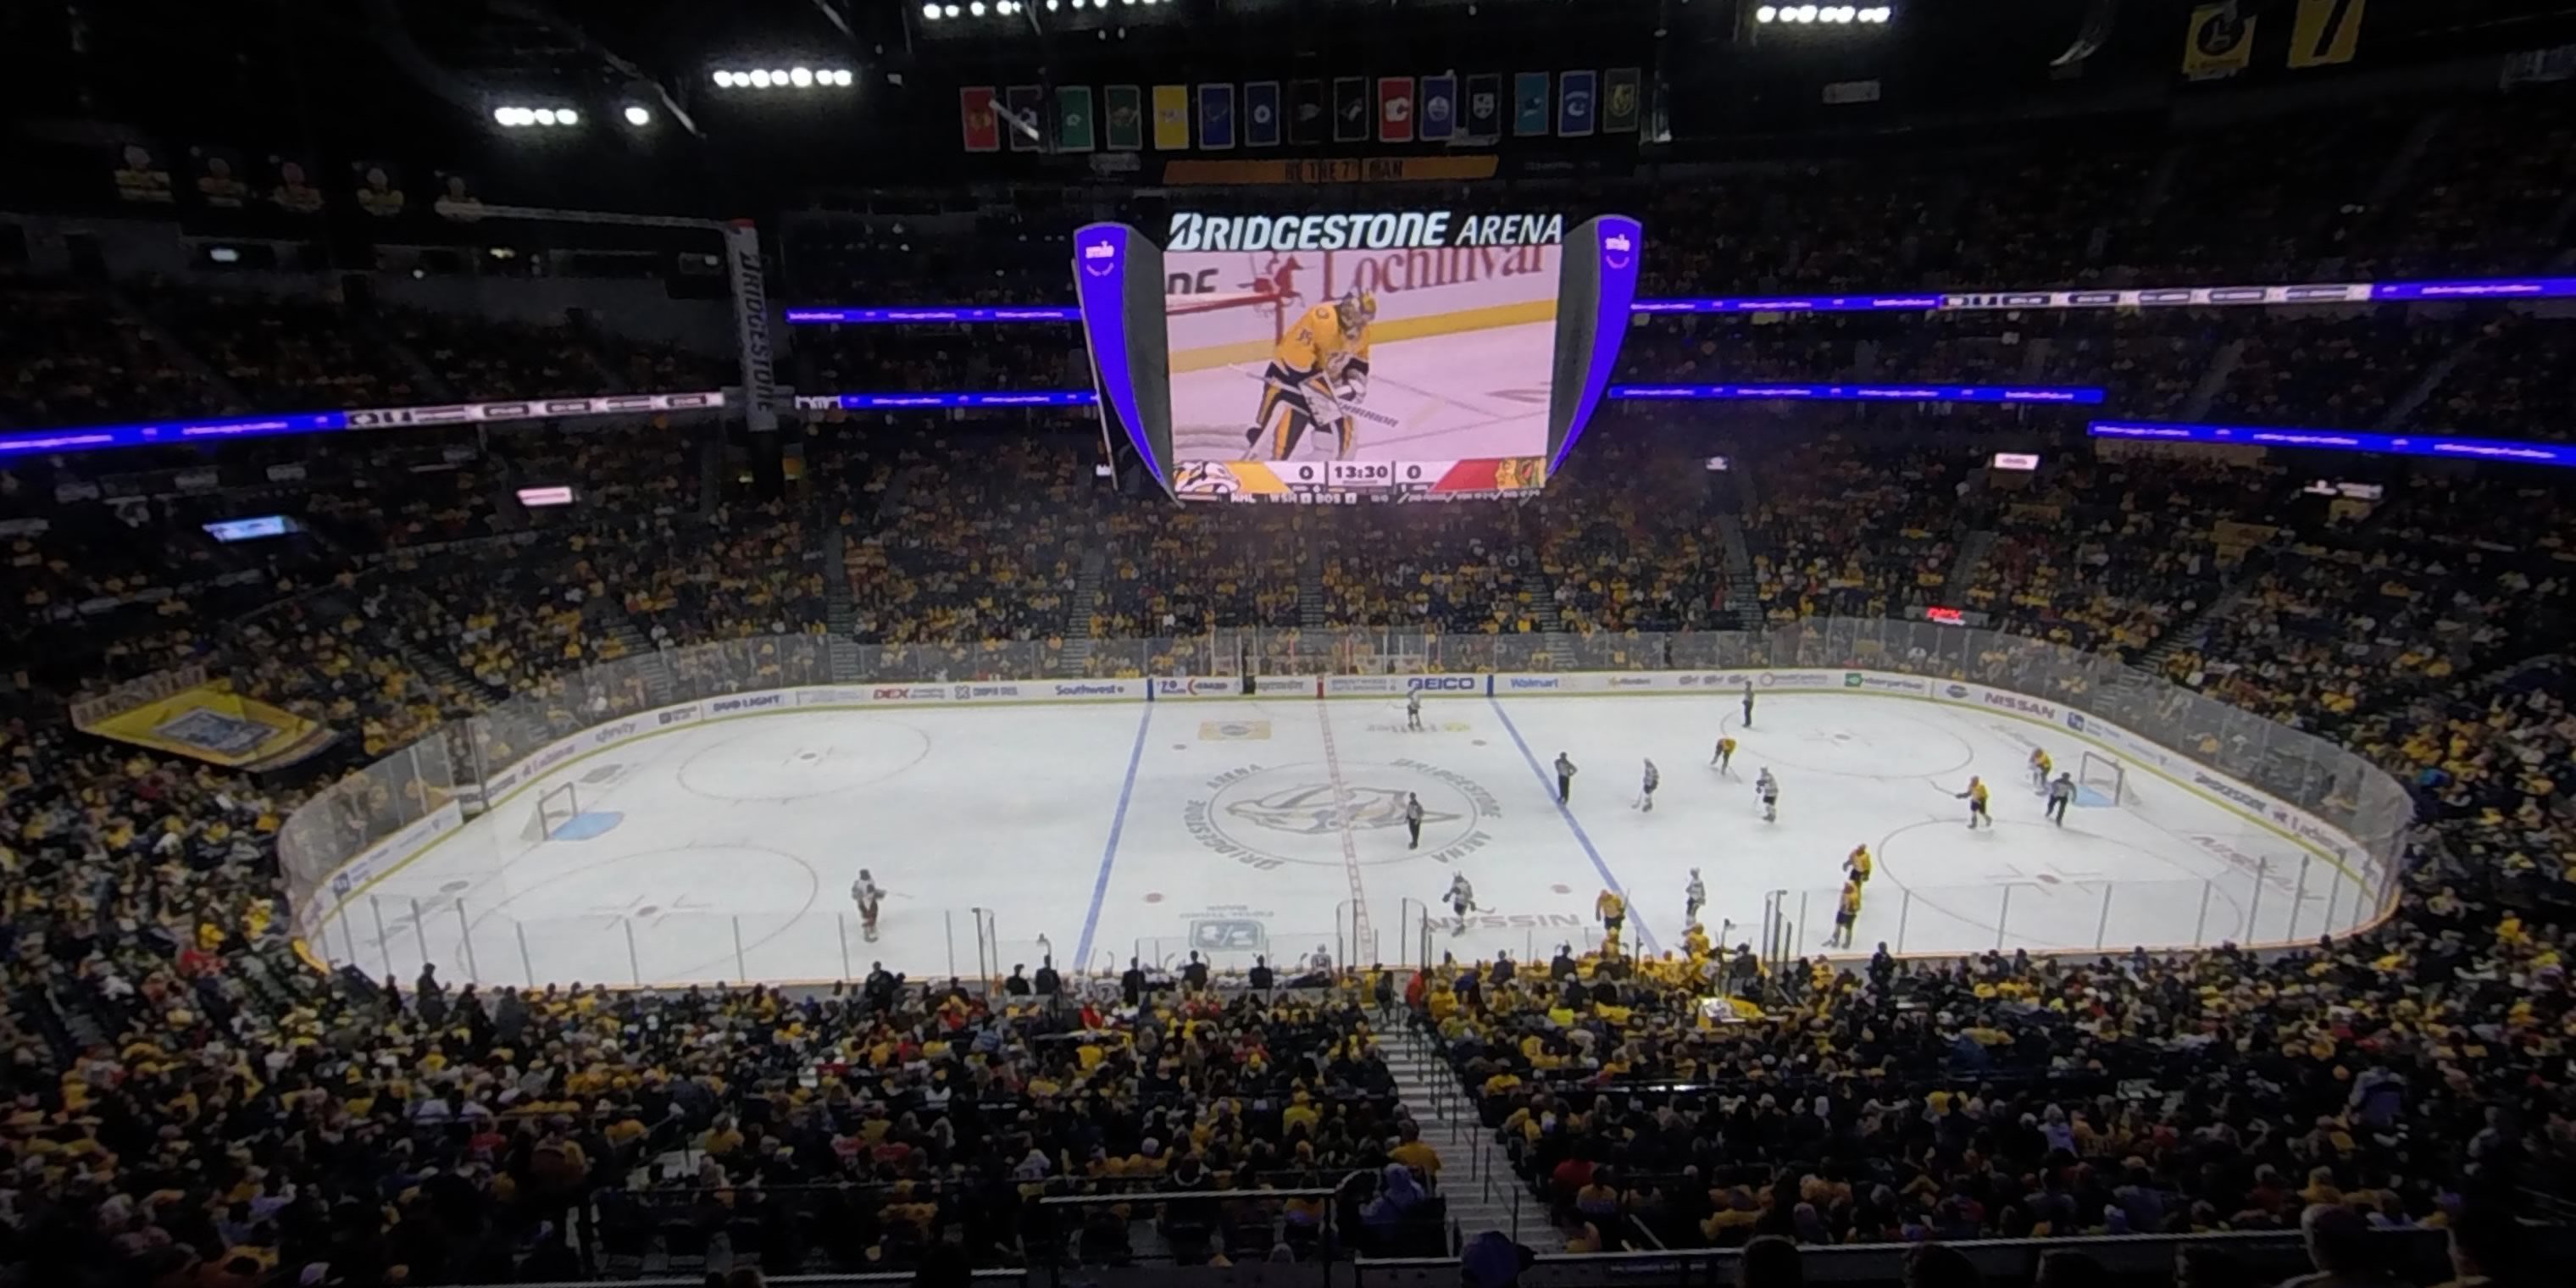 section 215 panoramic seat view  for hockey - bridgestone arena